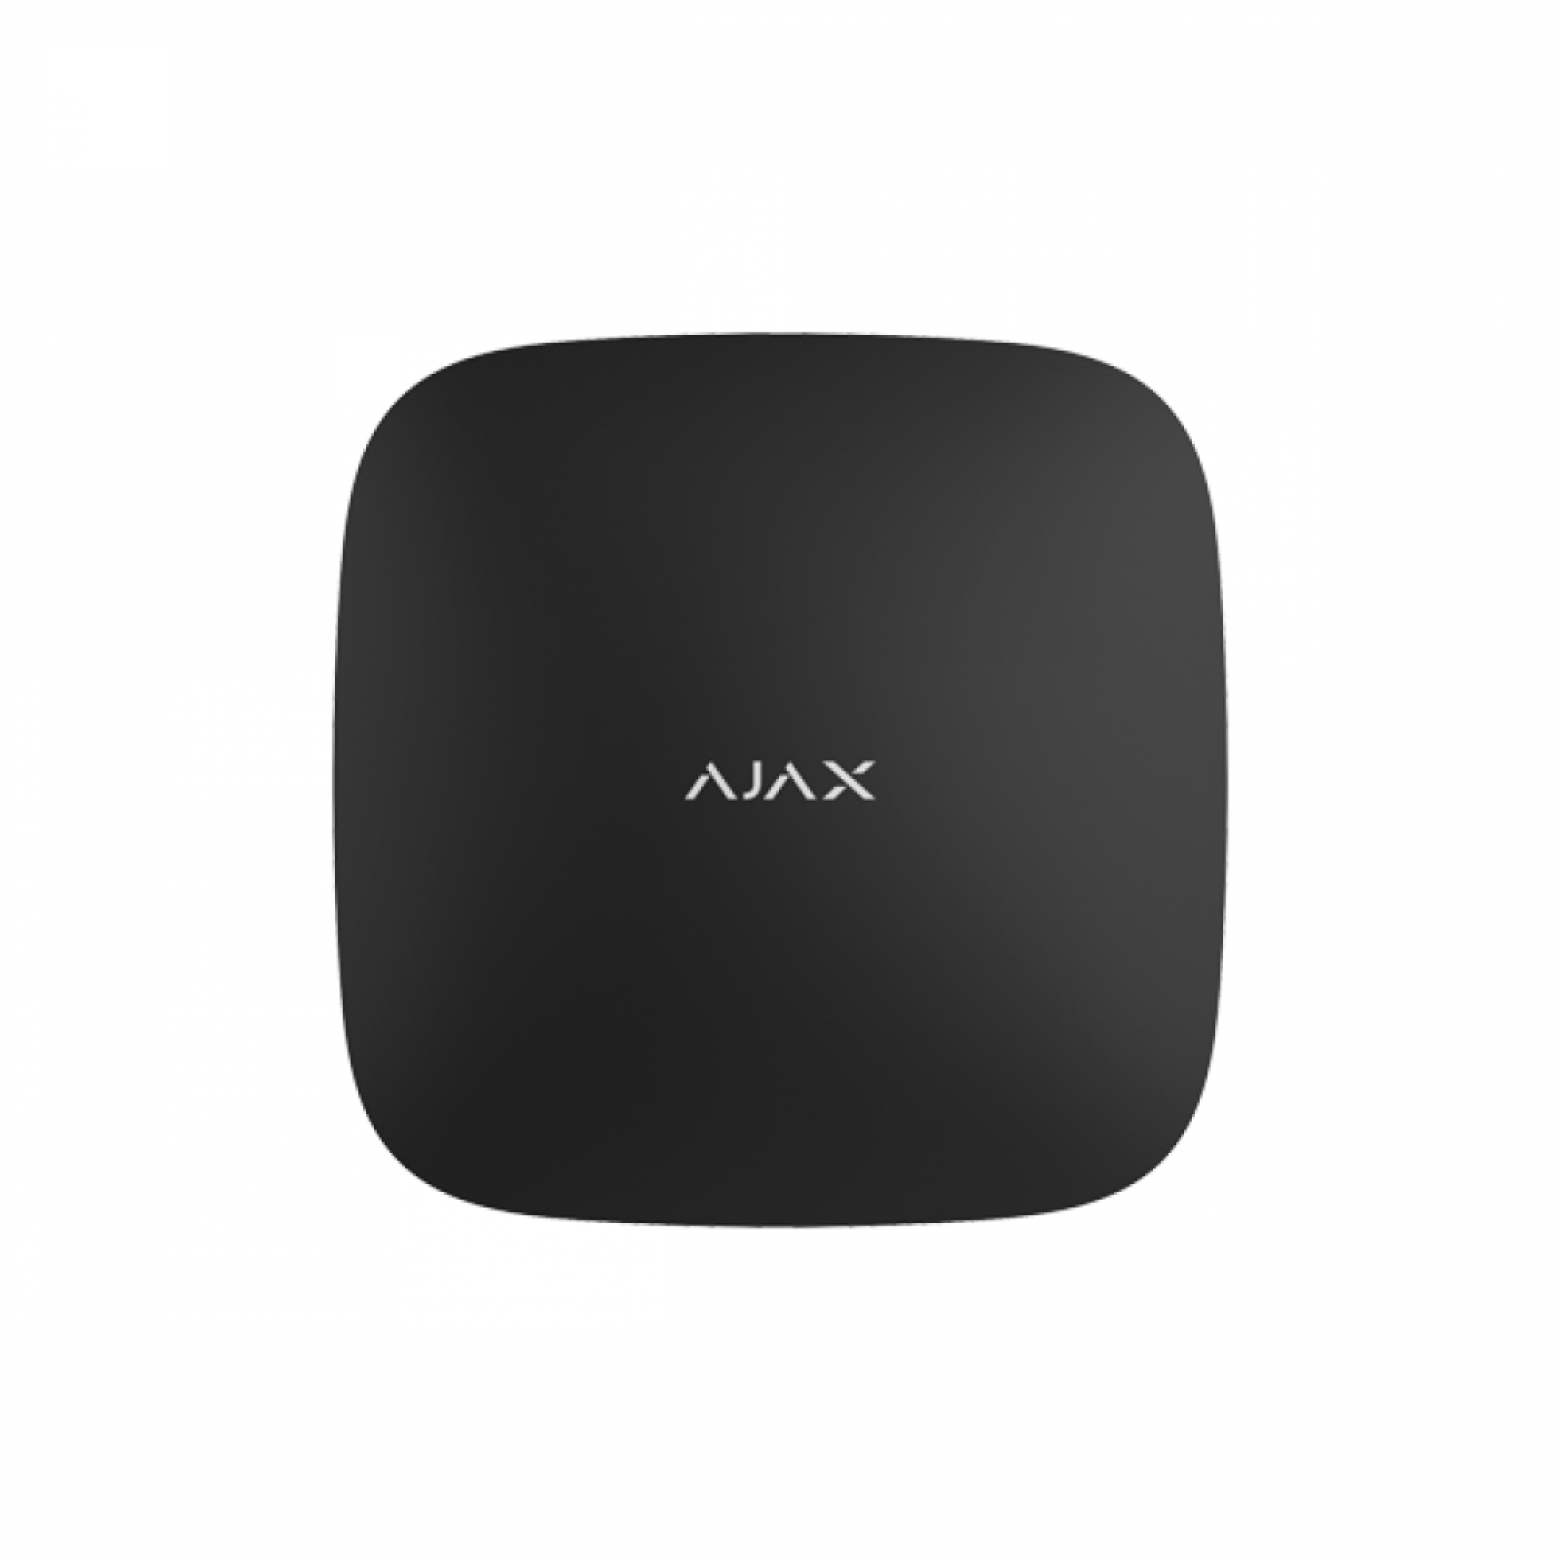 AJAX Hub 2 Plus Draadloos Alarmsysteem wit/zwart